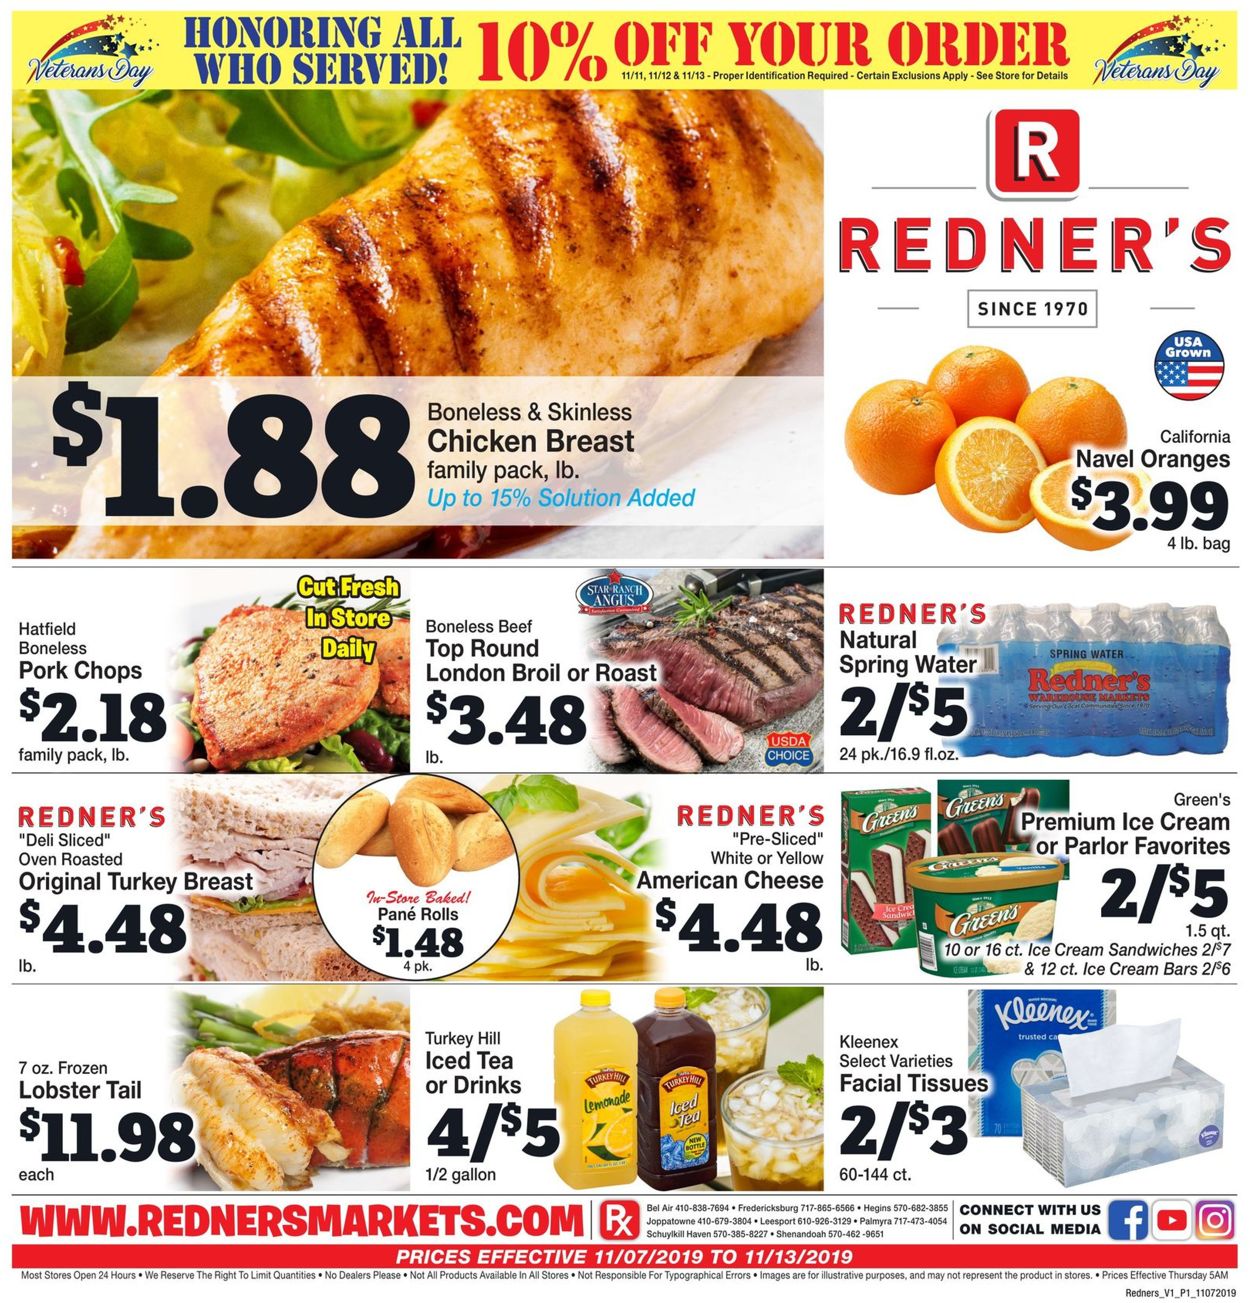 Redner’s Warehouse Market Ad from 11/07/2019